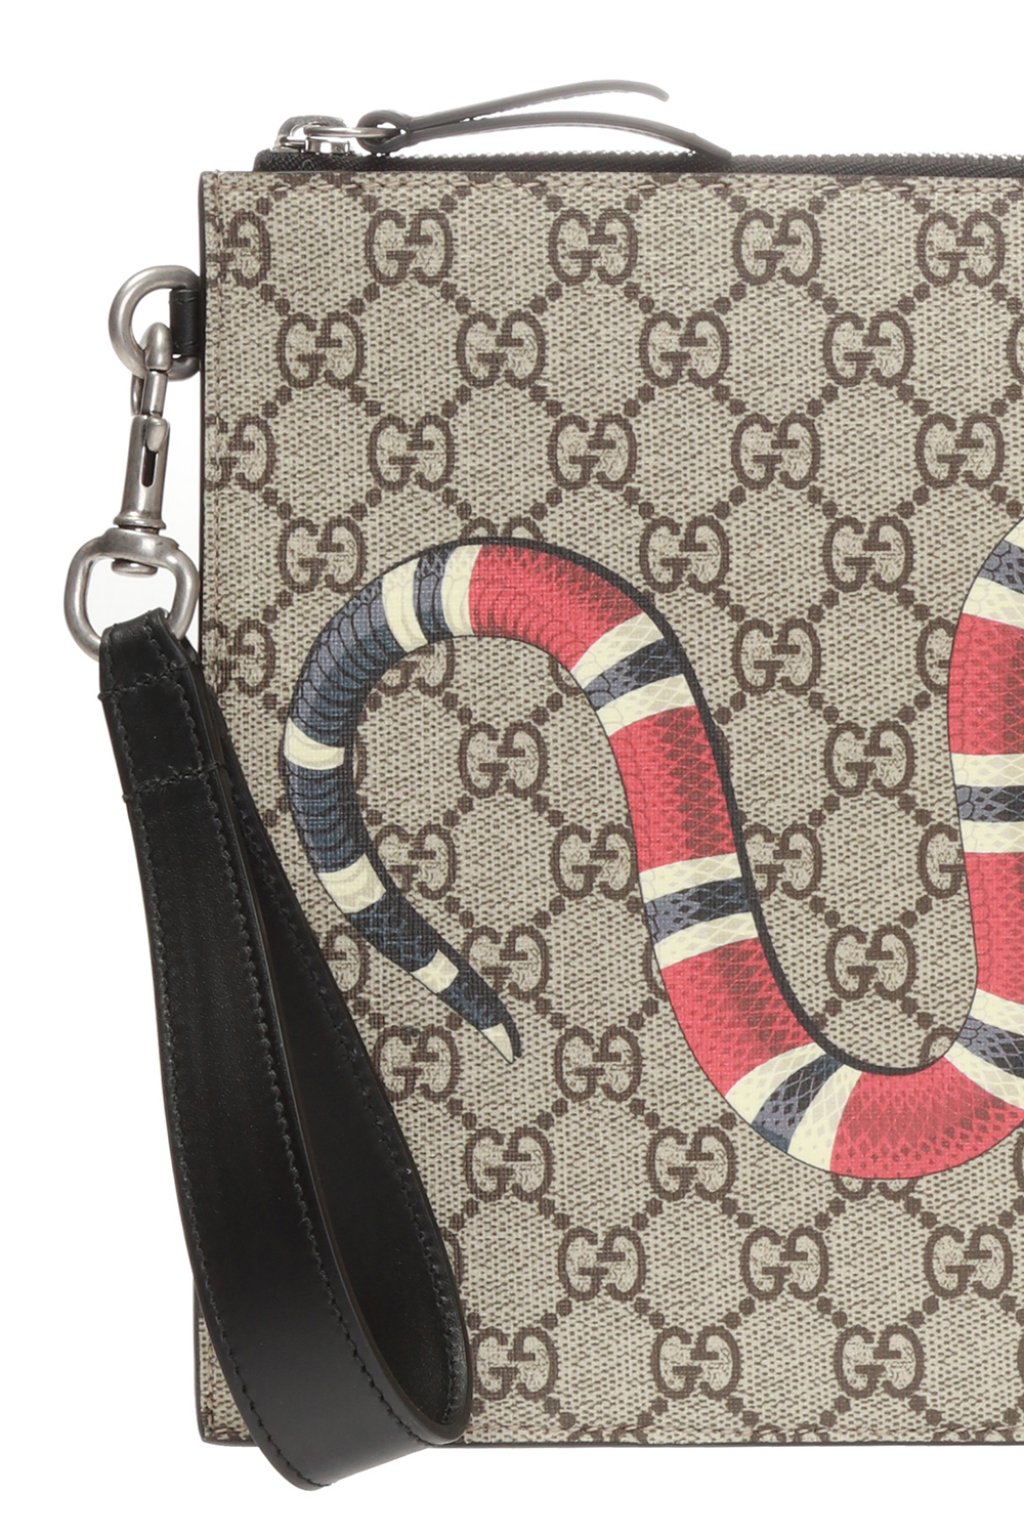 gucci snake clutch bag